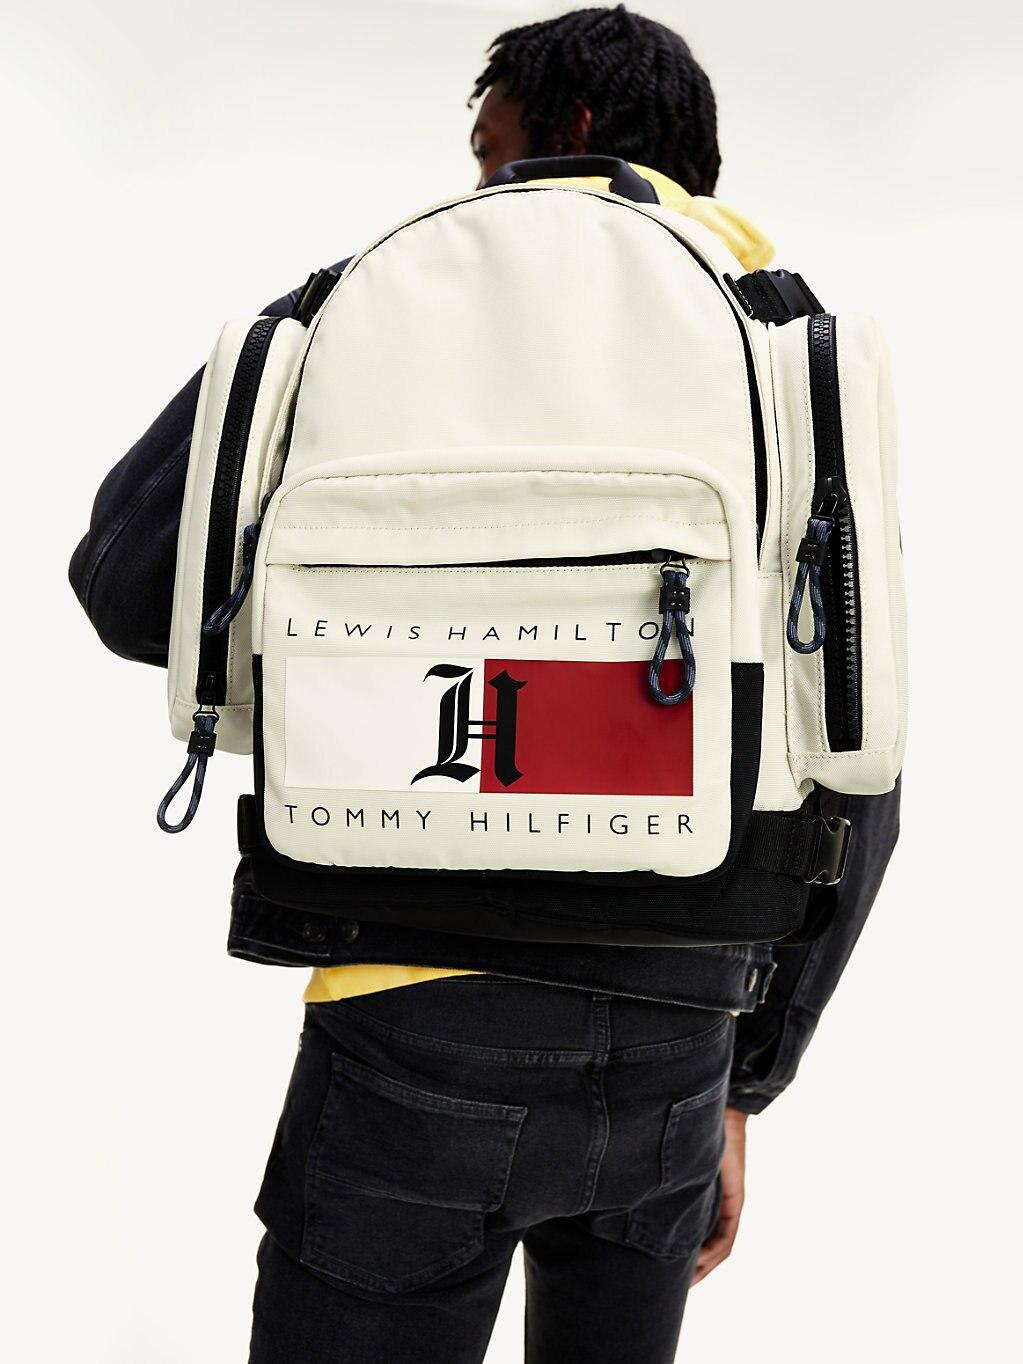 Tommy Hilfiger Lewis Hamilton Bag Shop Wholesale, Save 58% | jlcatj.gob.mx